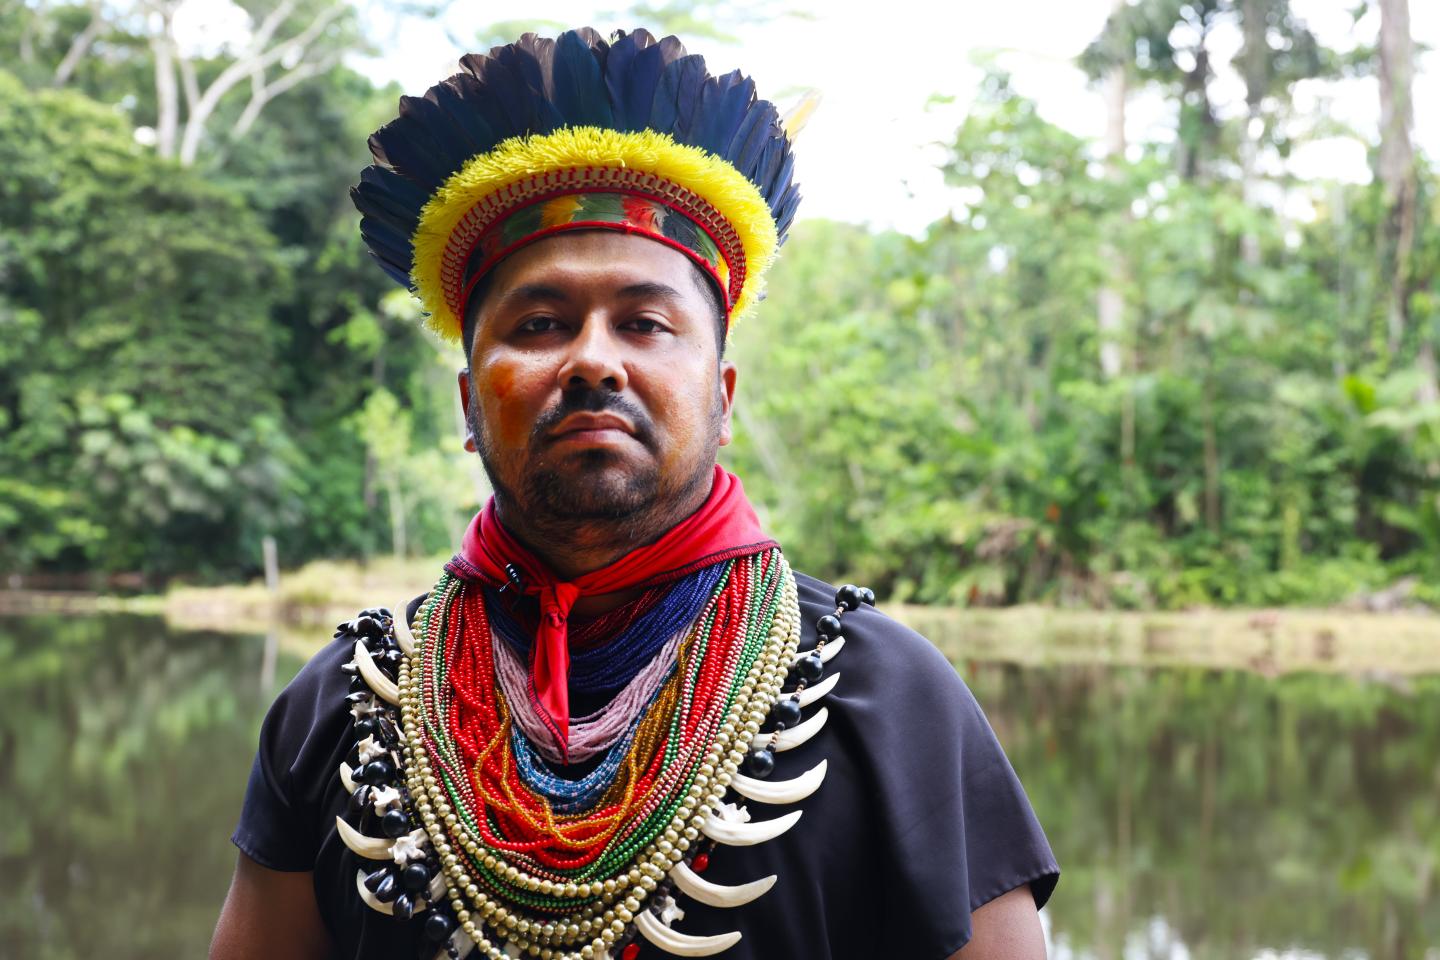 A photo of indigenous leader Ramiro Ortiz, who lives in Ecuador's Amazon rainforest.